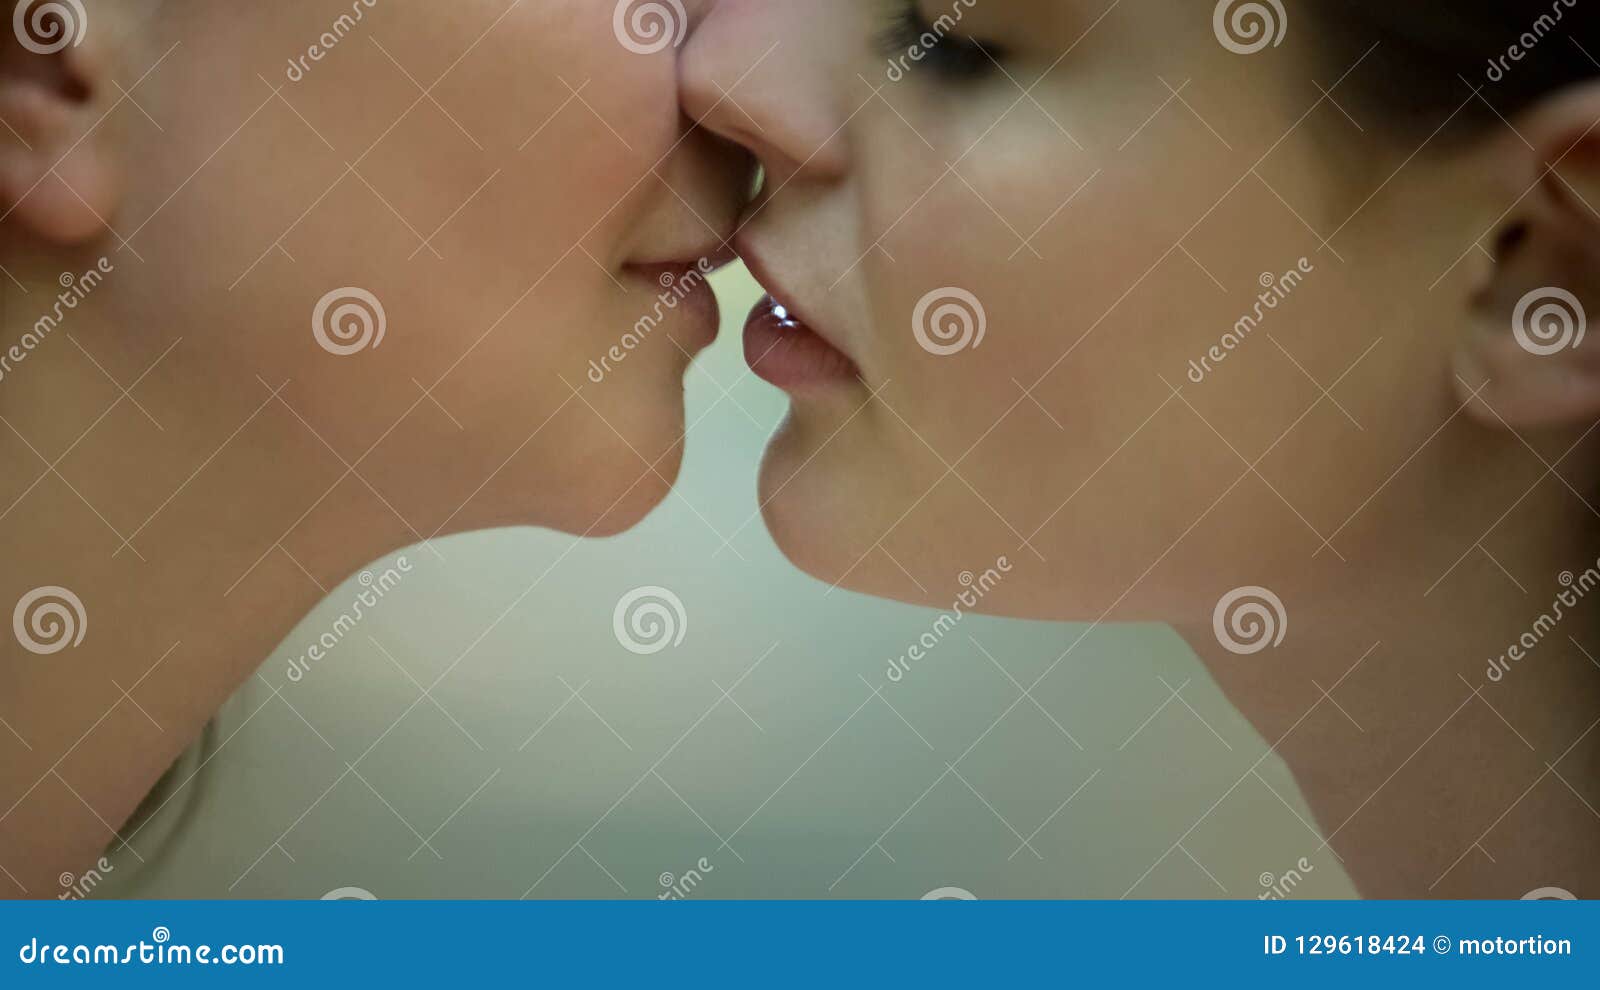 Romantic Love Sex Picture